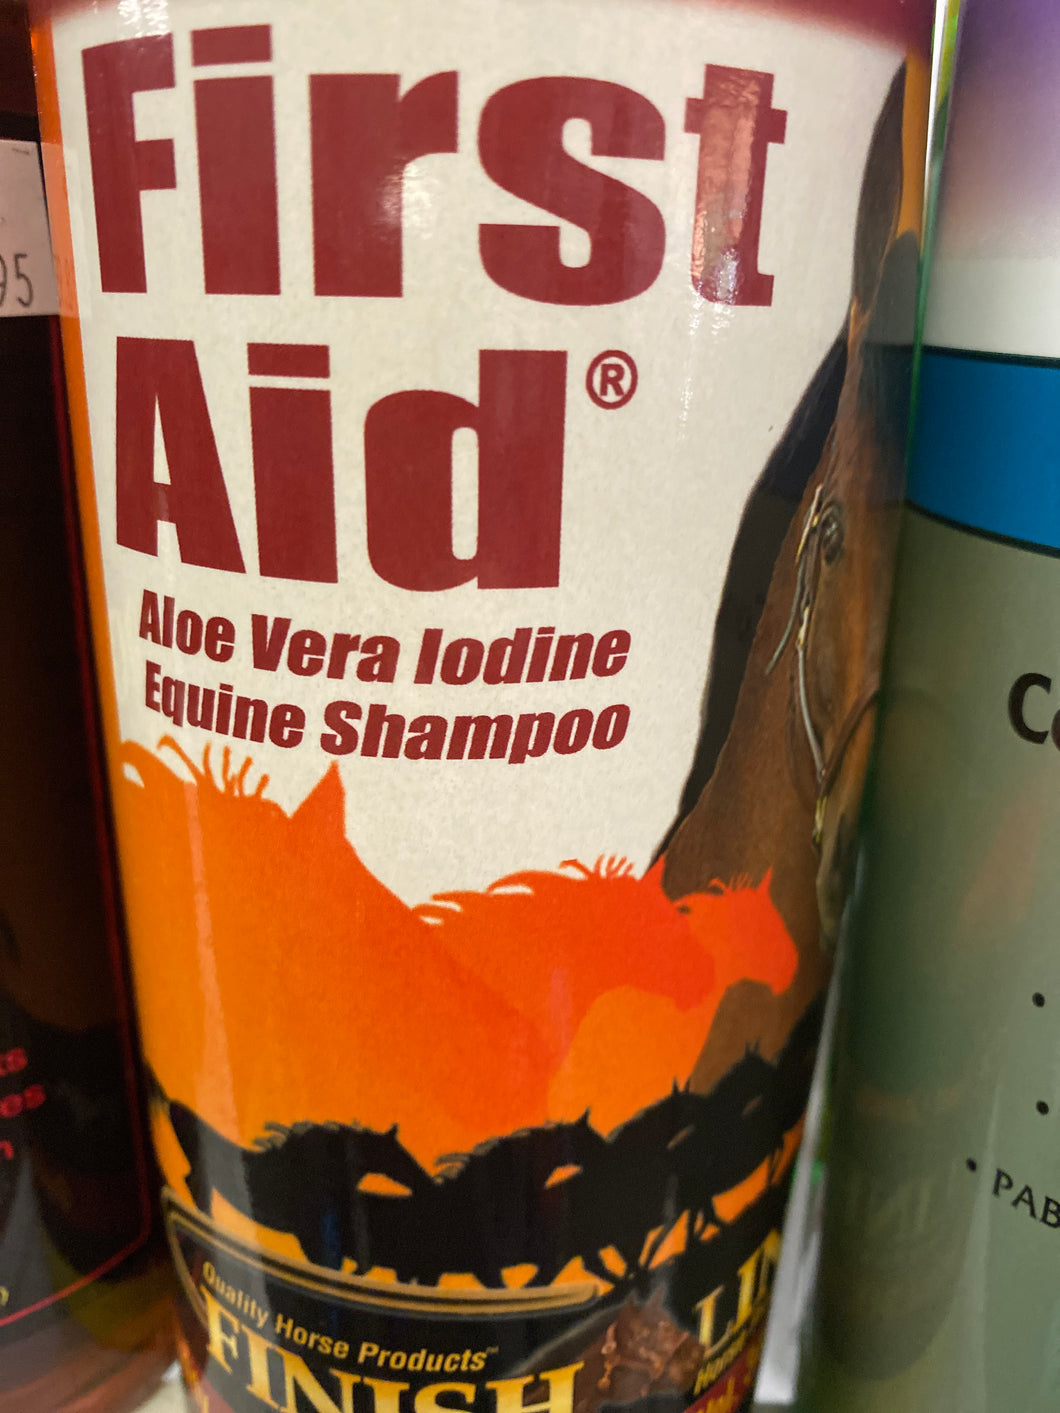 First Aid Aloe Vera Iodine Equine Shampoo